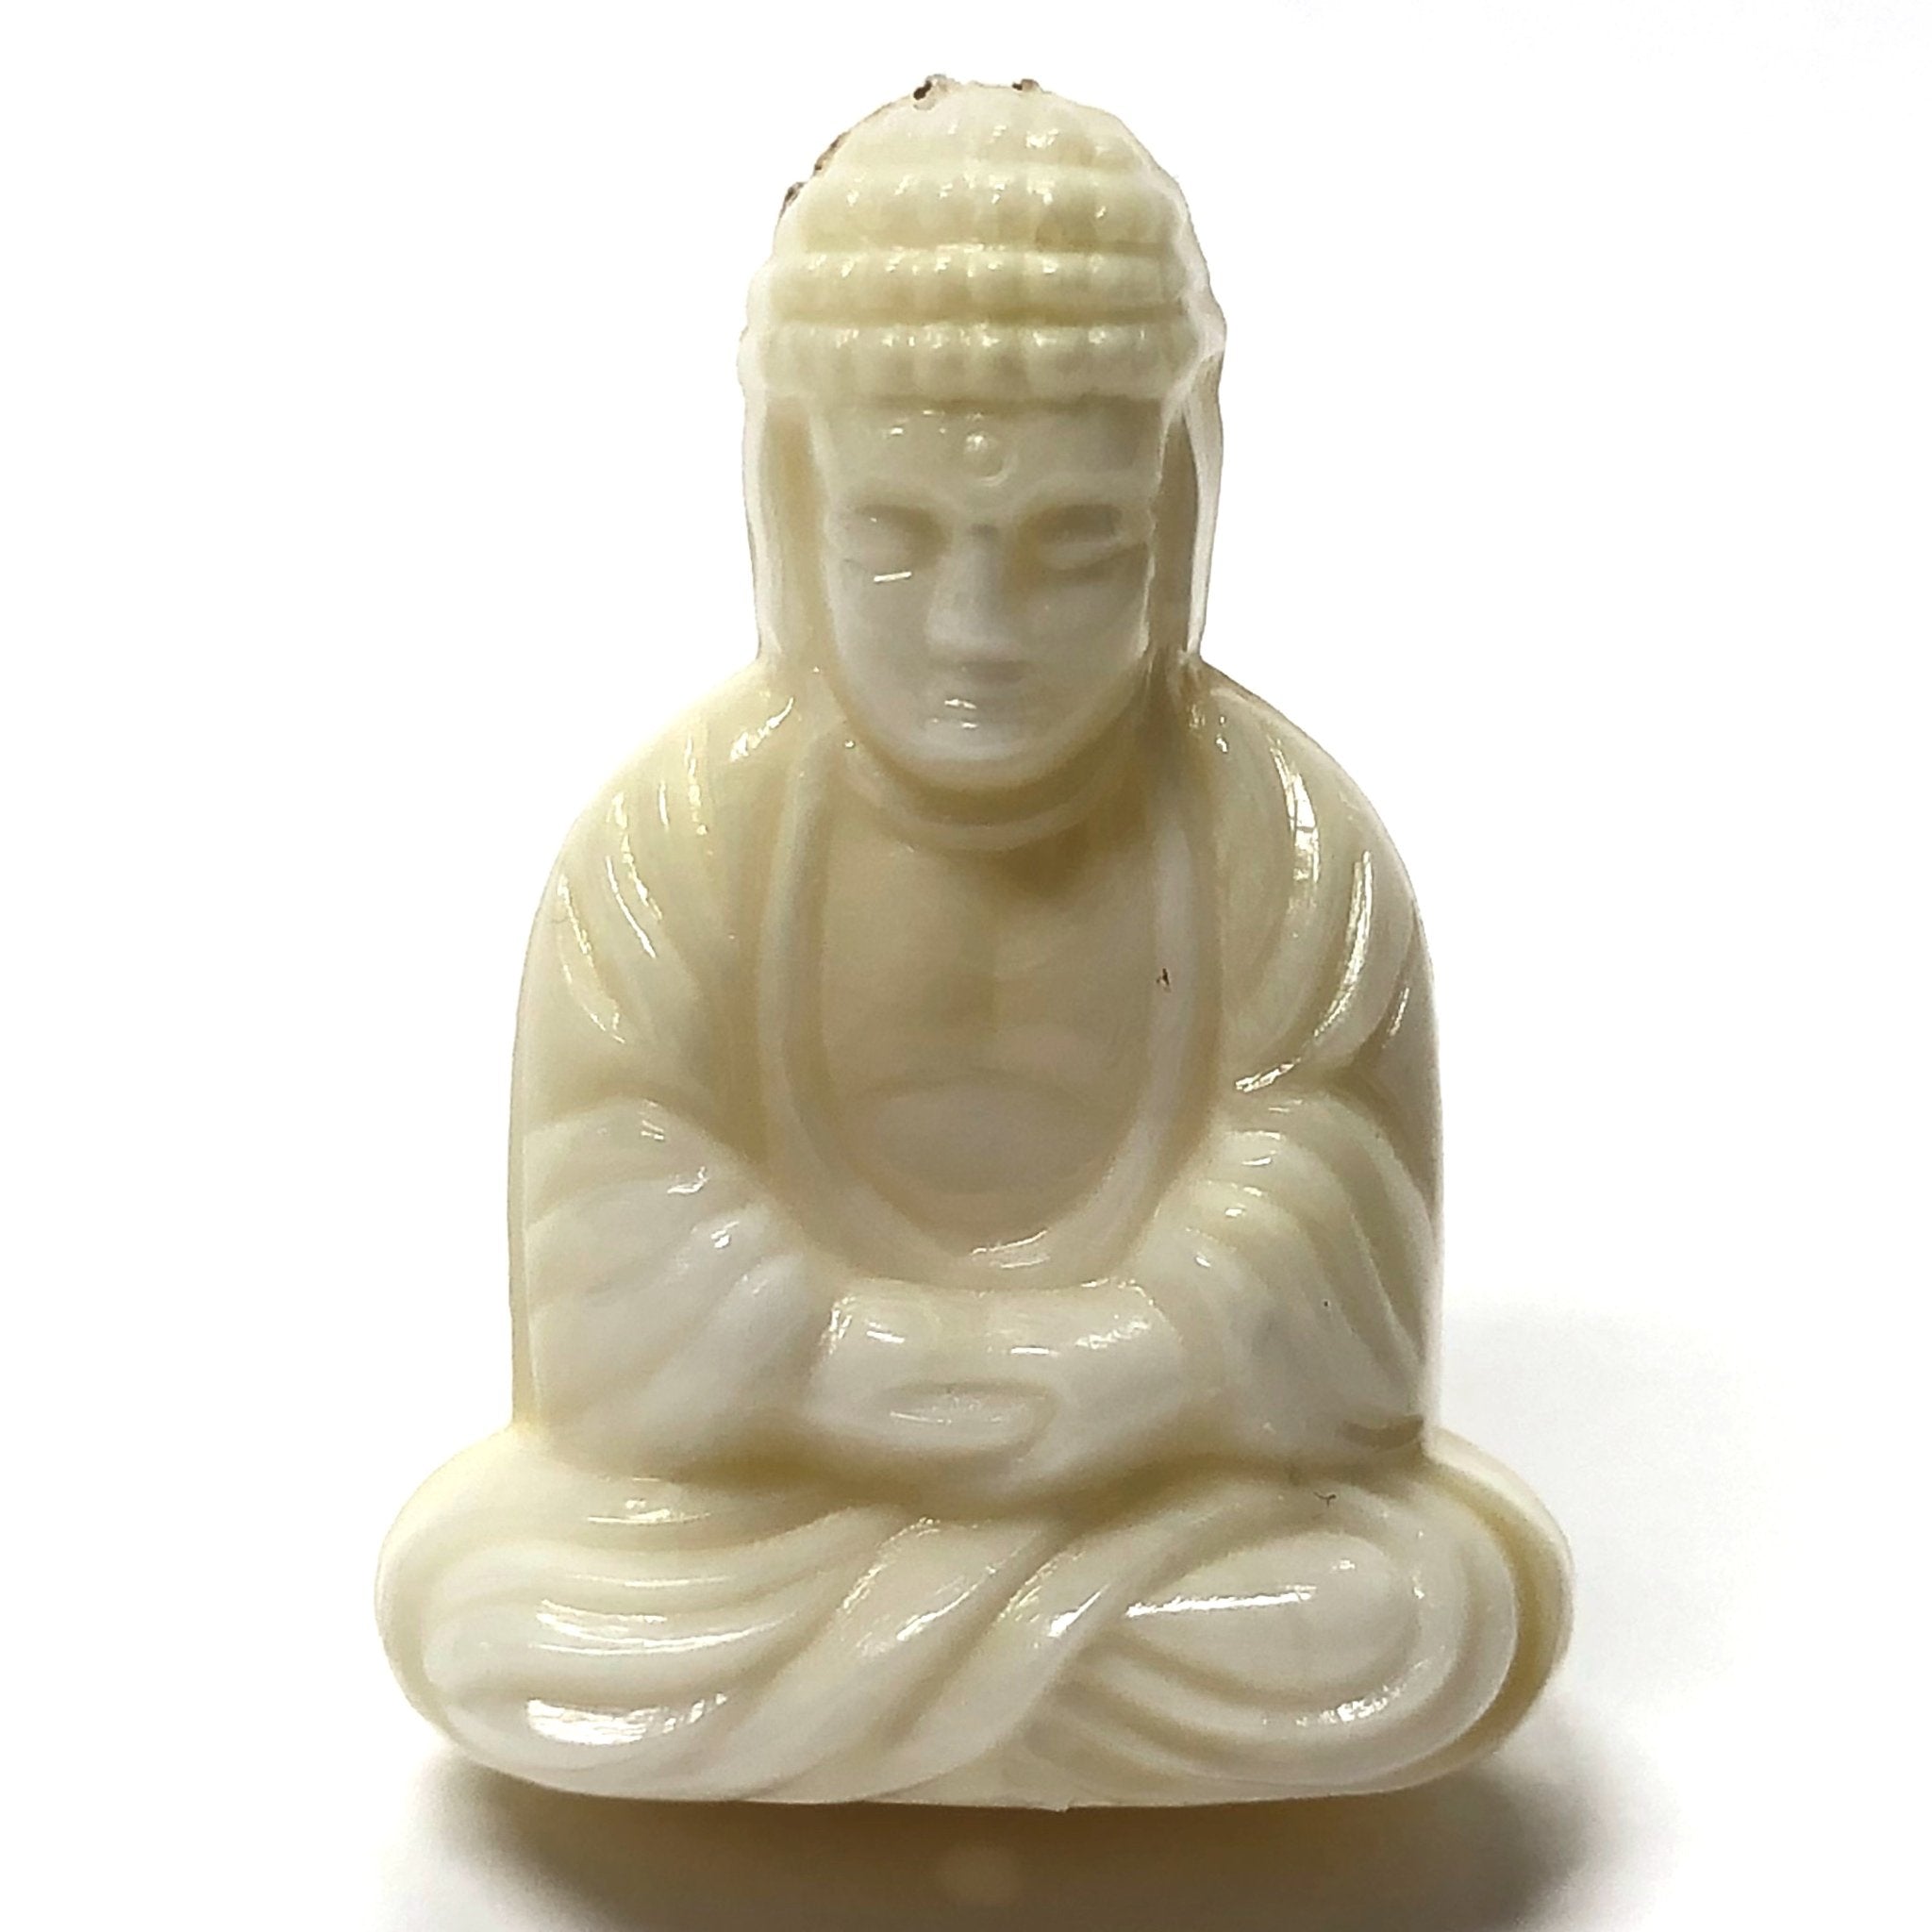 25X18MM "Ivorine" Seated Buddha Acrylic Bead (36 pieces)